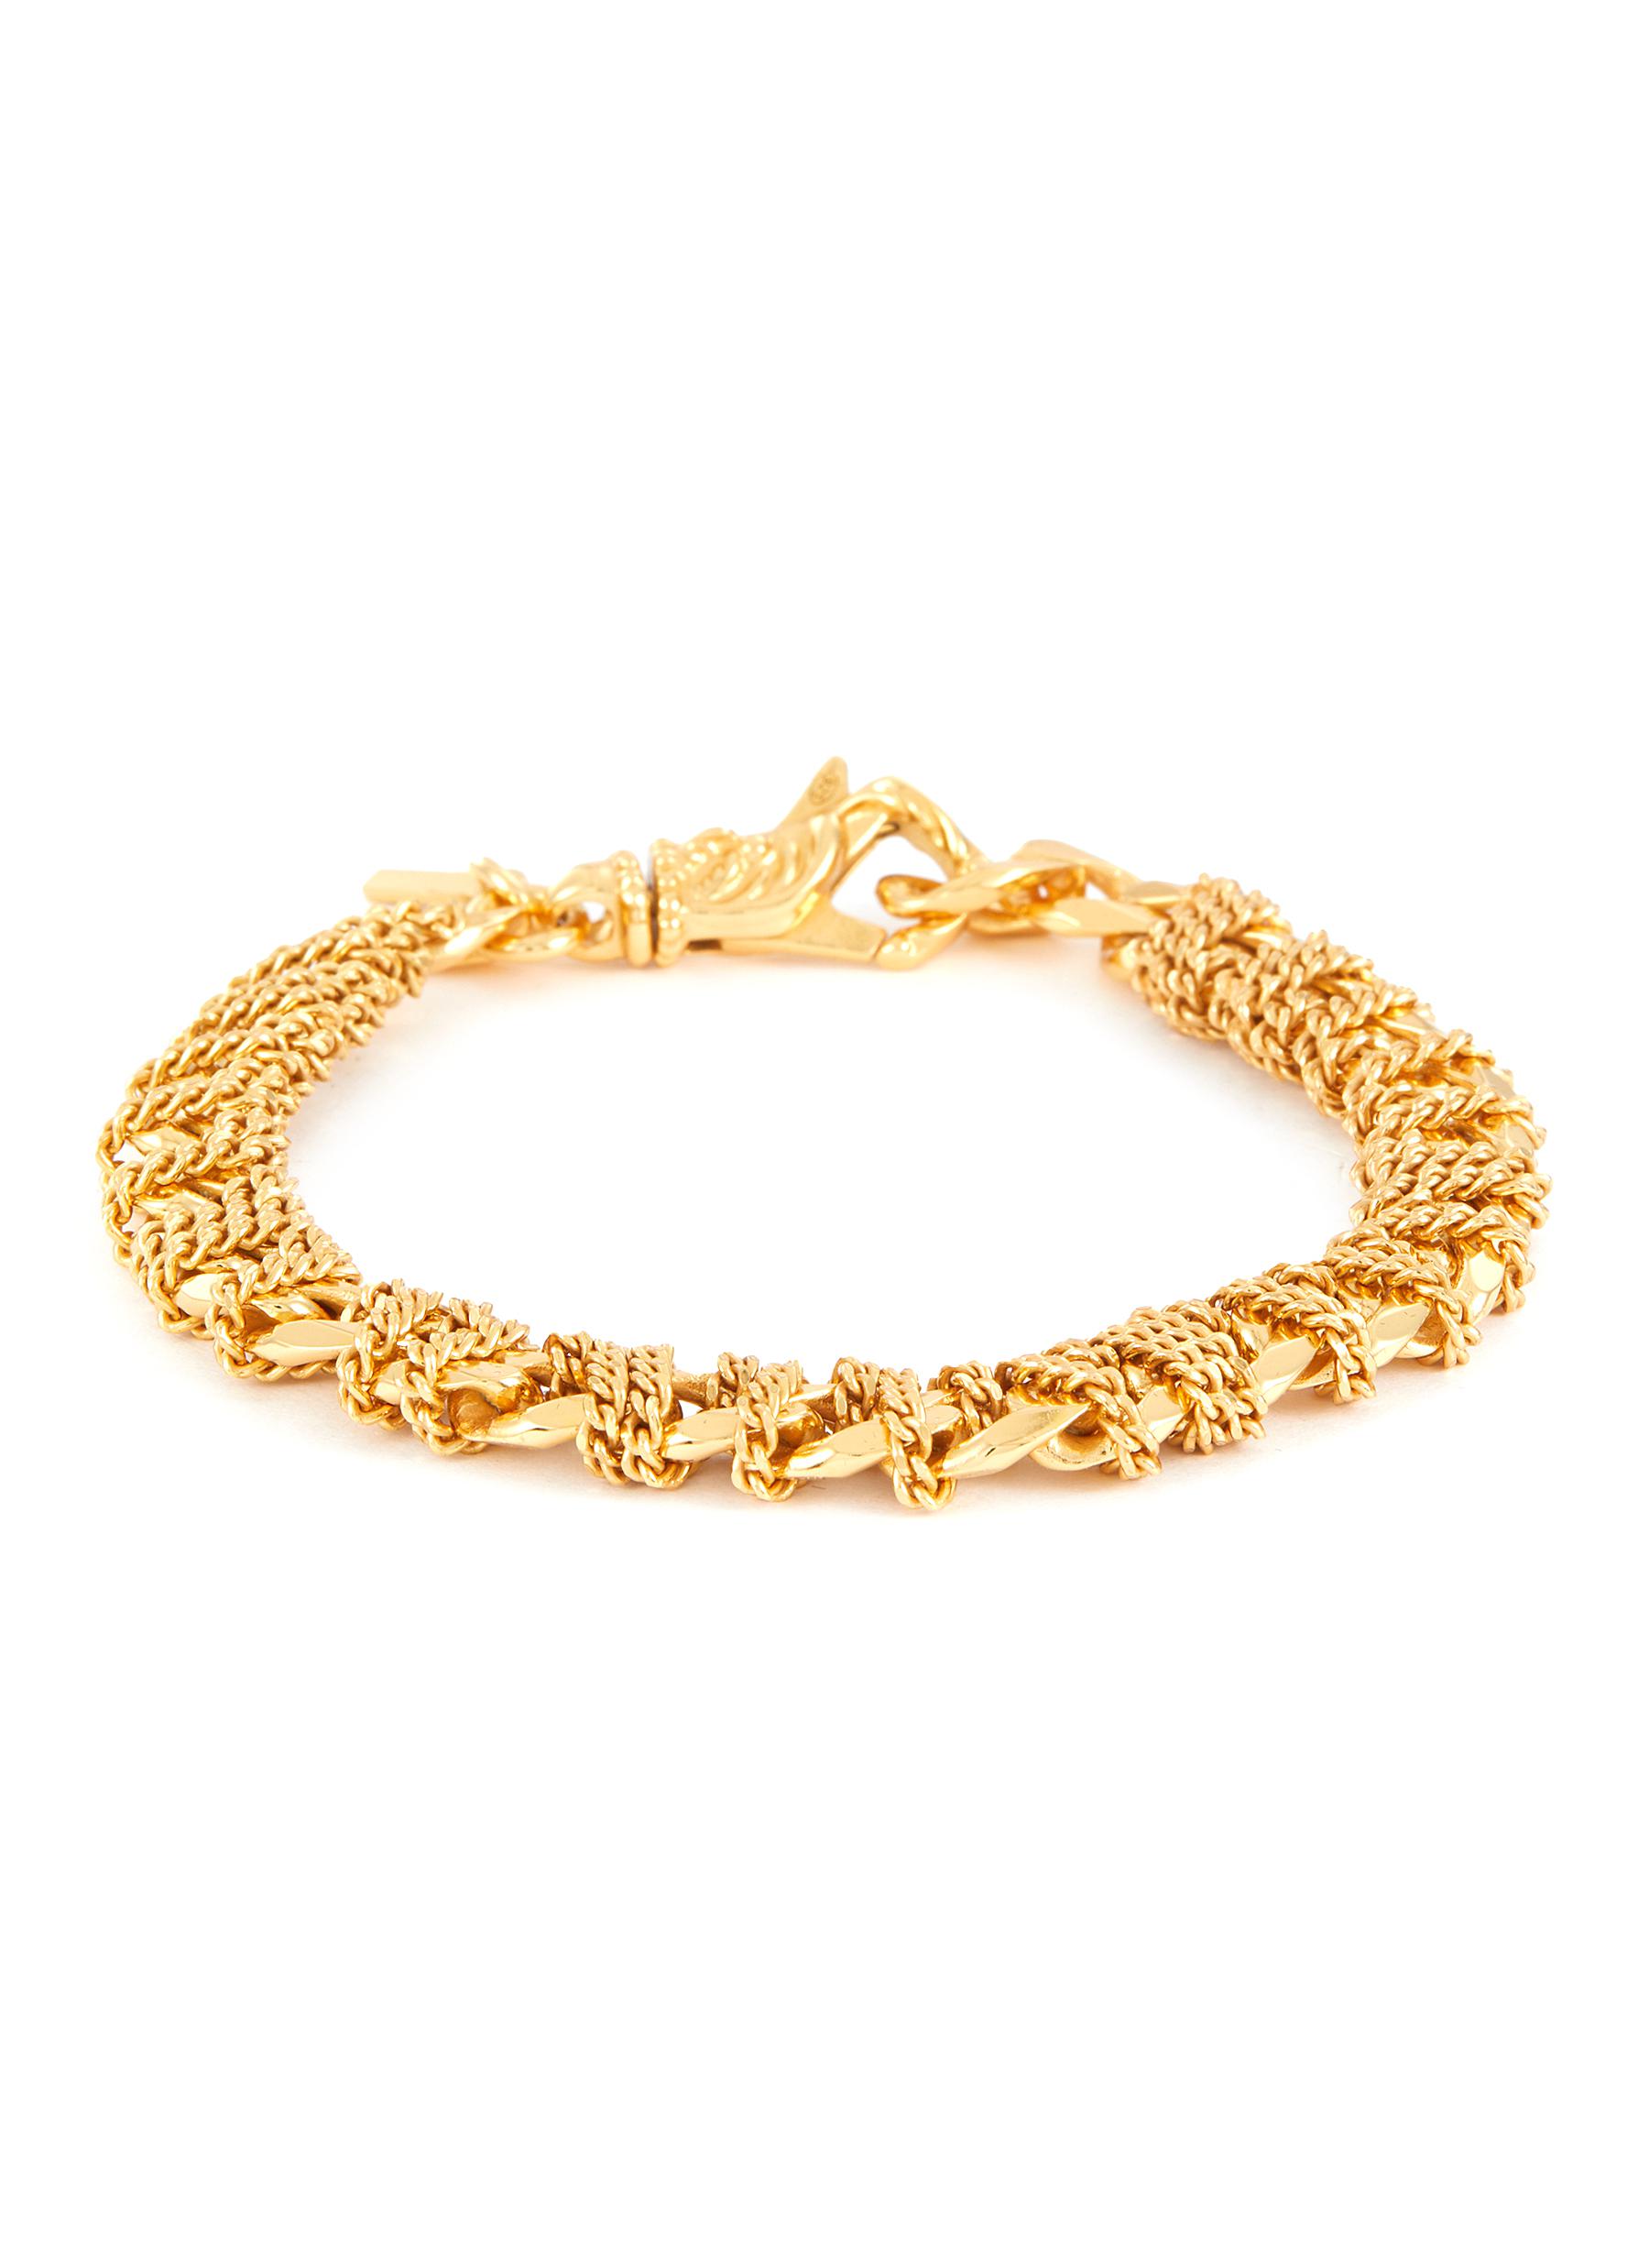 Wholesale 24k Gold Gp 6.5mm Width Men's Bracelet 20cm Free Shipping.fashion  Pure Gold Color Men Jewelry Bracelet - Bracelets - AliExpress